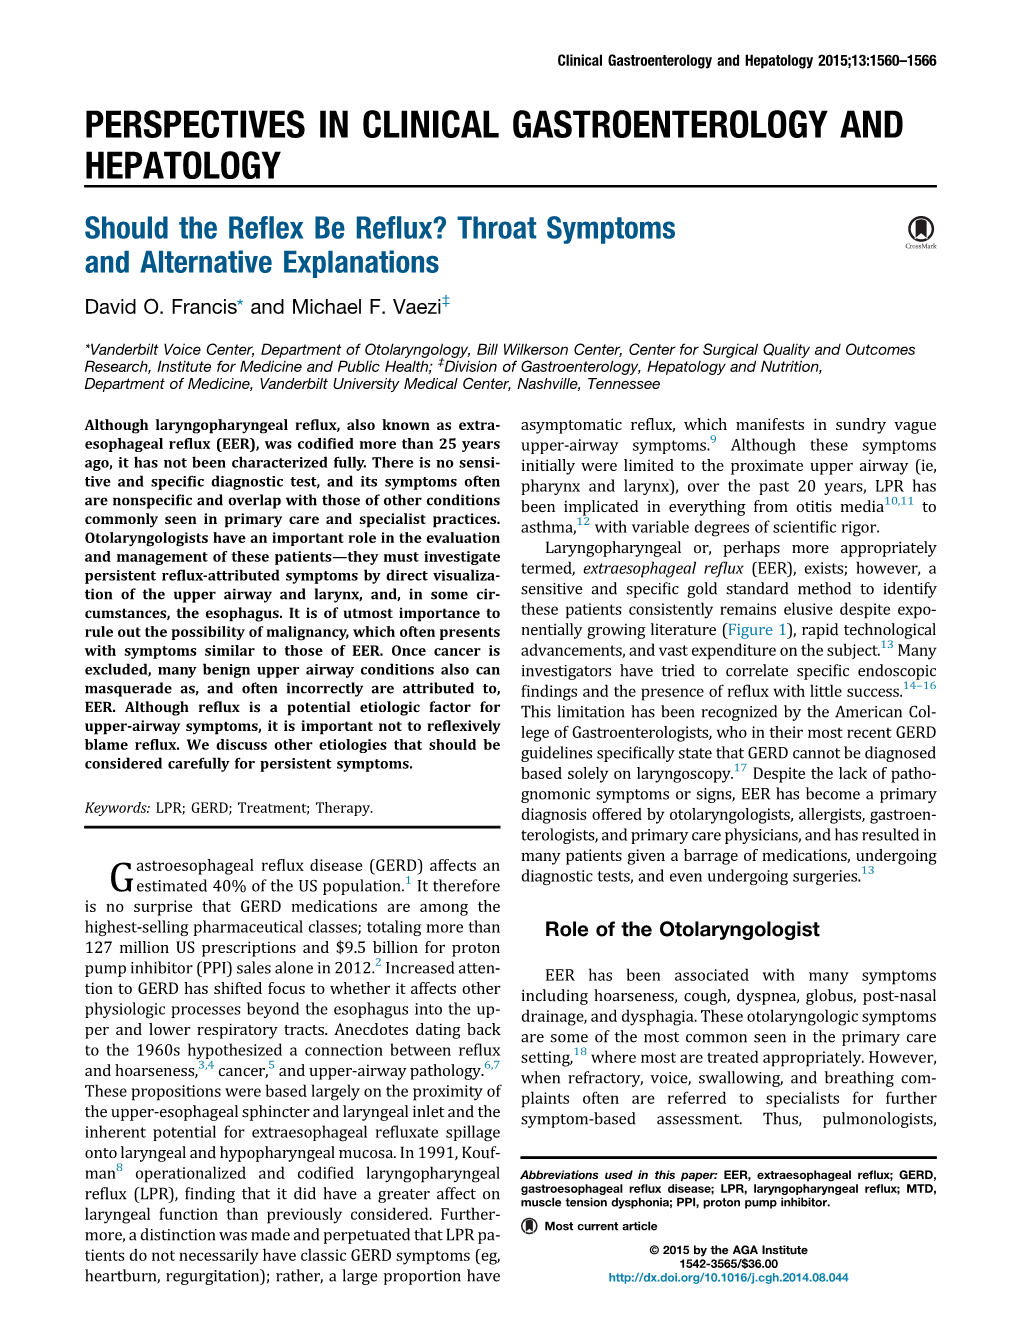 Should the Reflex Be Reflux? Throat Symptoms and Alternative